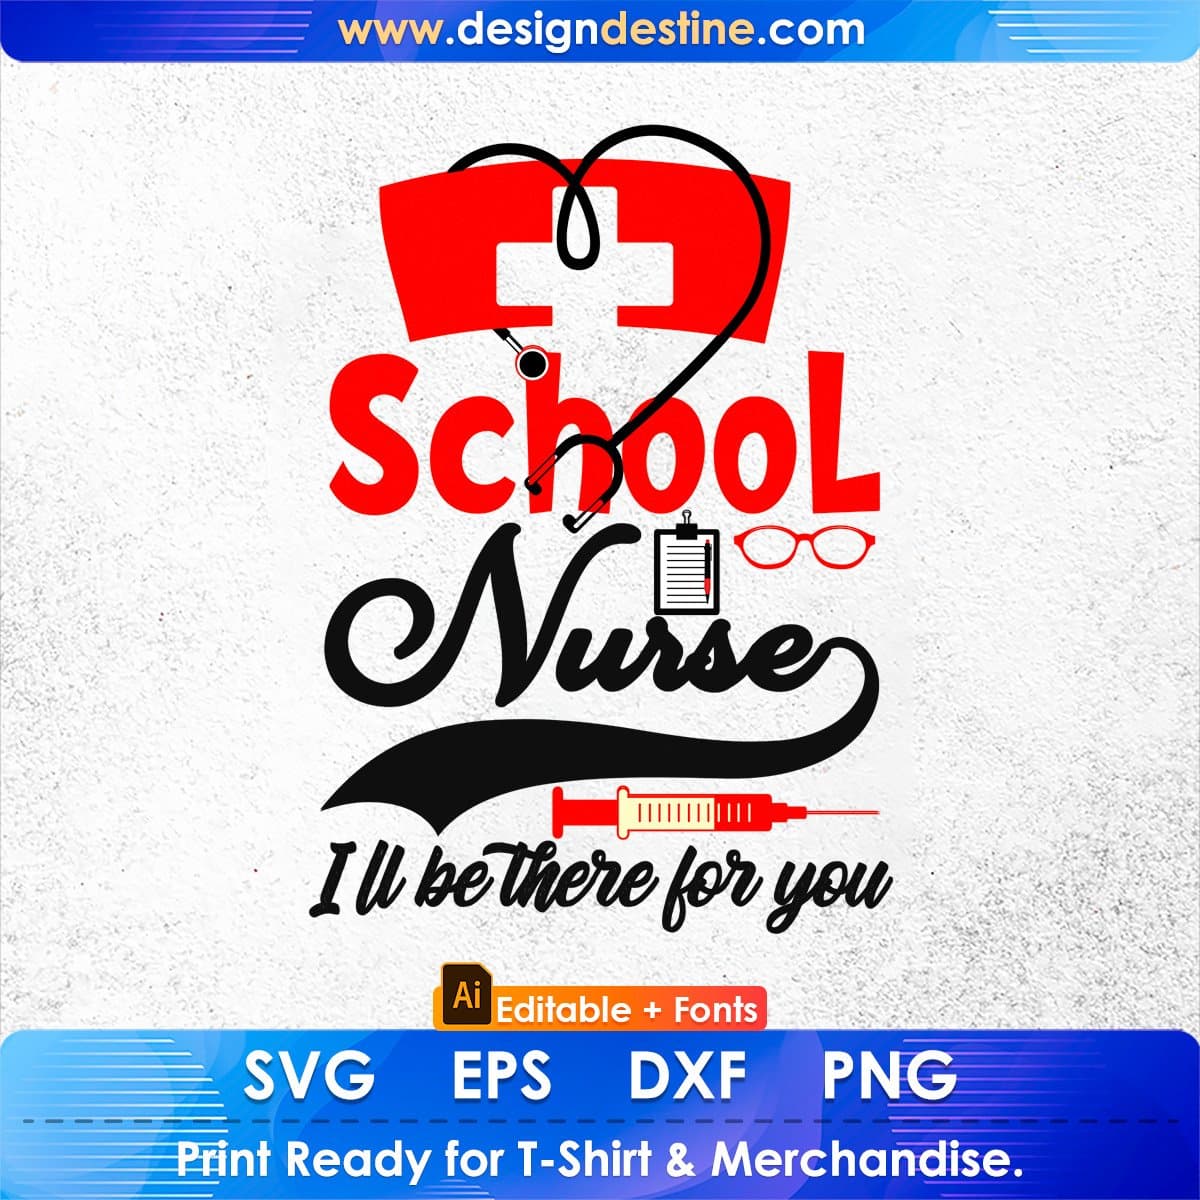 School Nurse Funny Nursing Student Graduate Editable T shirt Design In Ai Svg Files